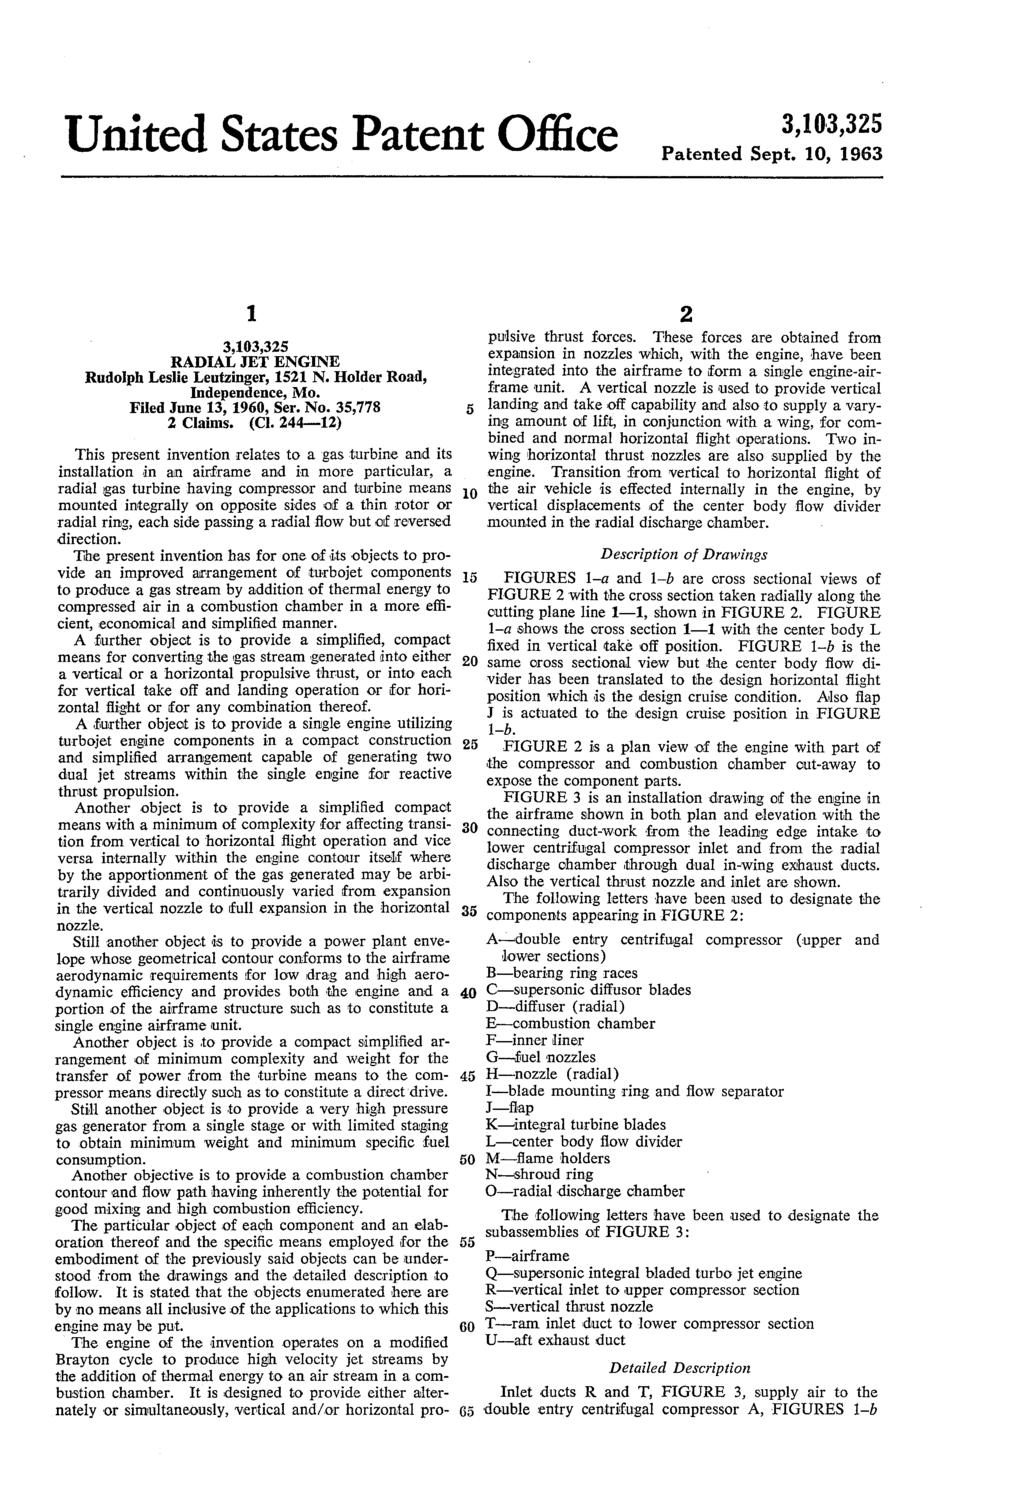 United States Patent Office Patented Sept. 10, 1963 1. RADAL, JET ENGINE Rudolph Leslie Leutzinger, 1521 N. Holder Road, Independence, Mo. Filed June 13, 1960, Ser. No. 35,778 2 Claims. (C.